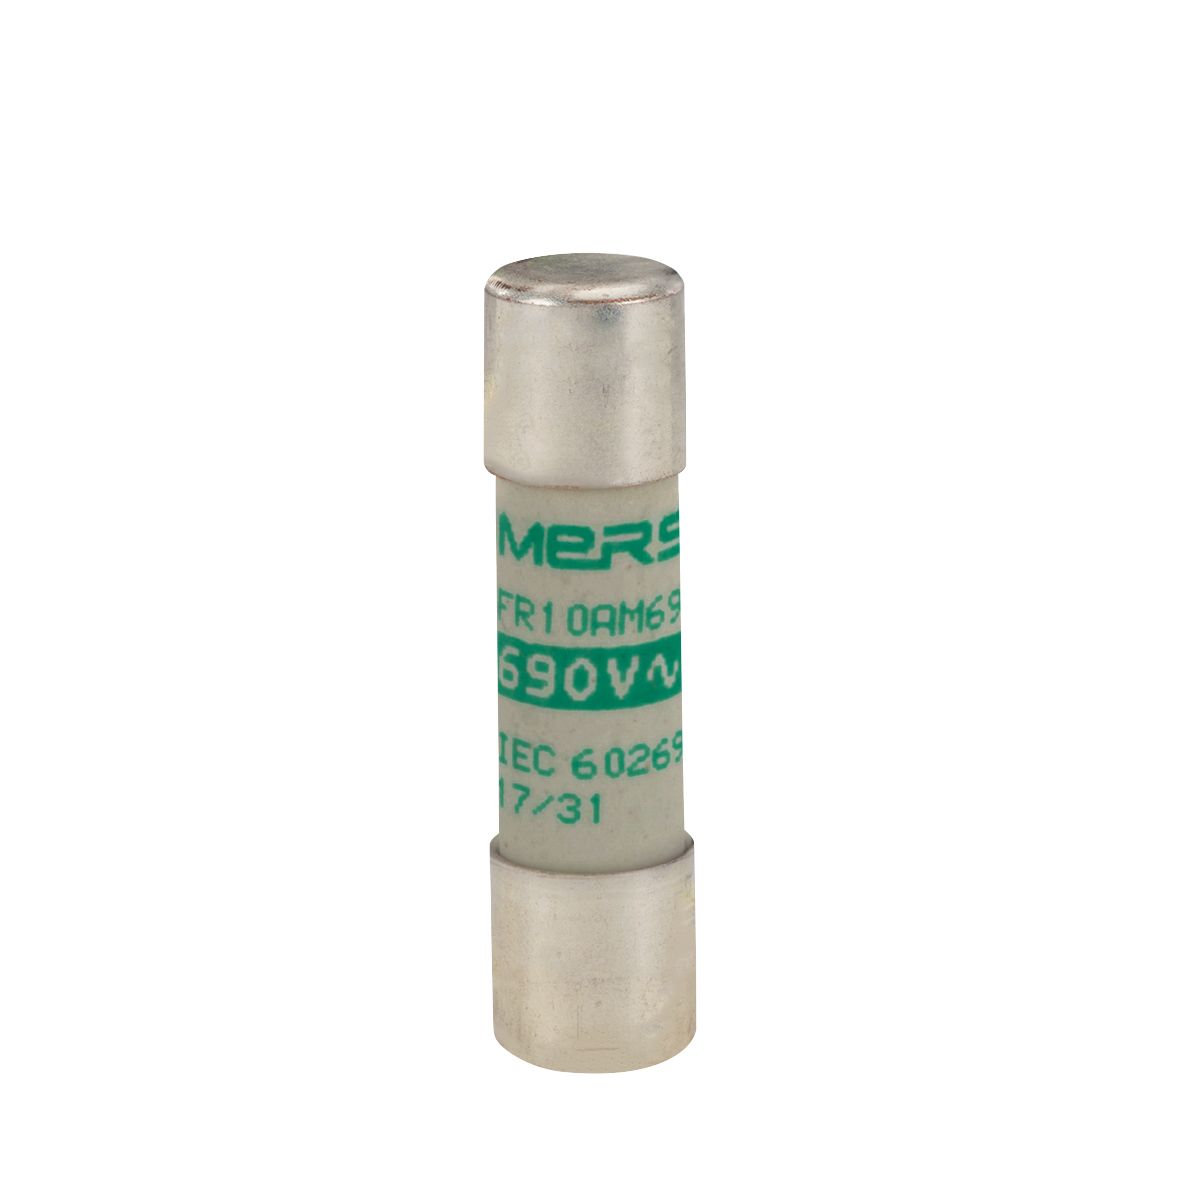 J302780 - Cylindrical fuse-link aM 690VAC 10.3x38, 2A